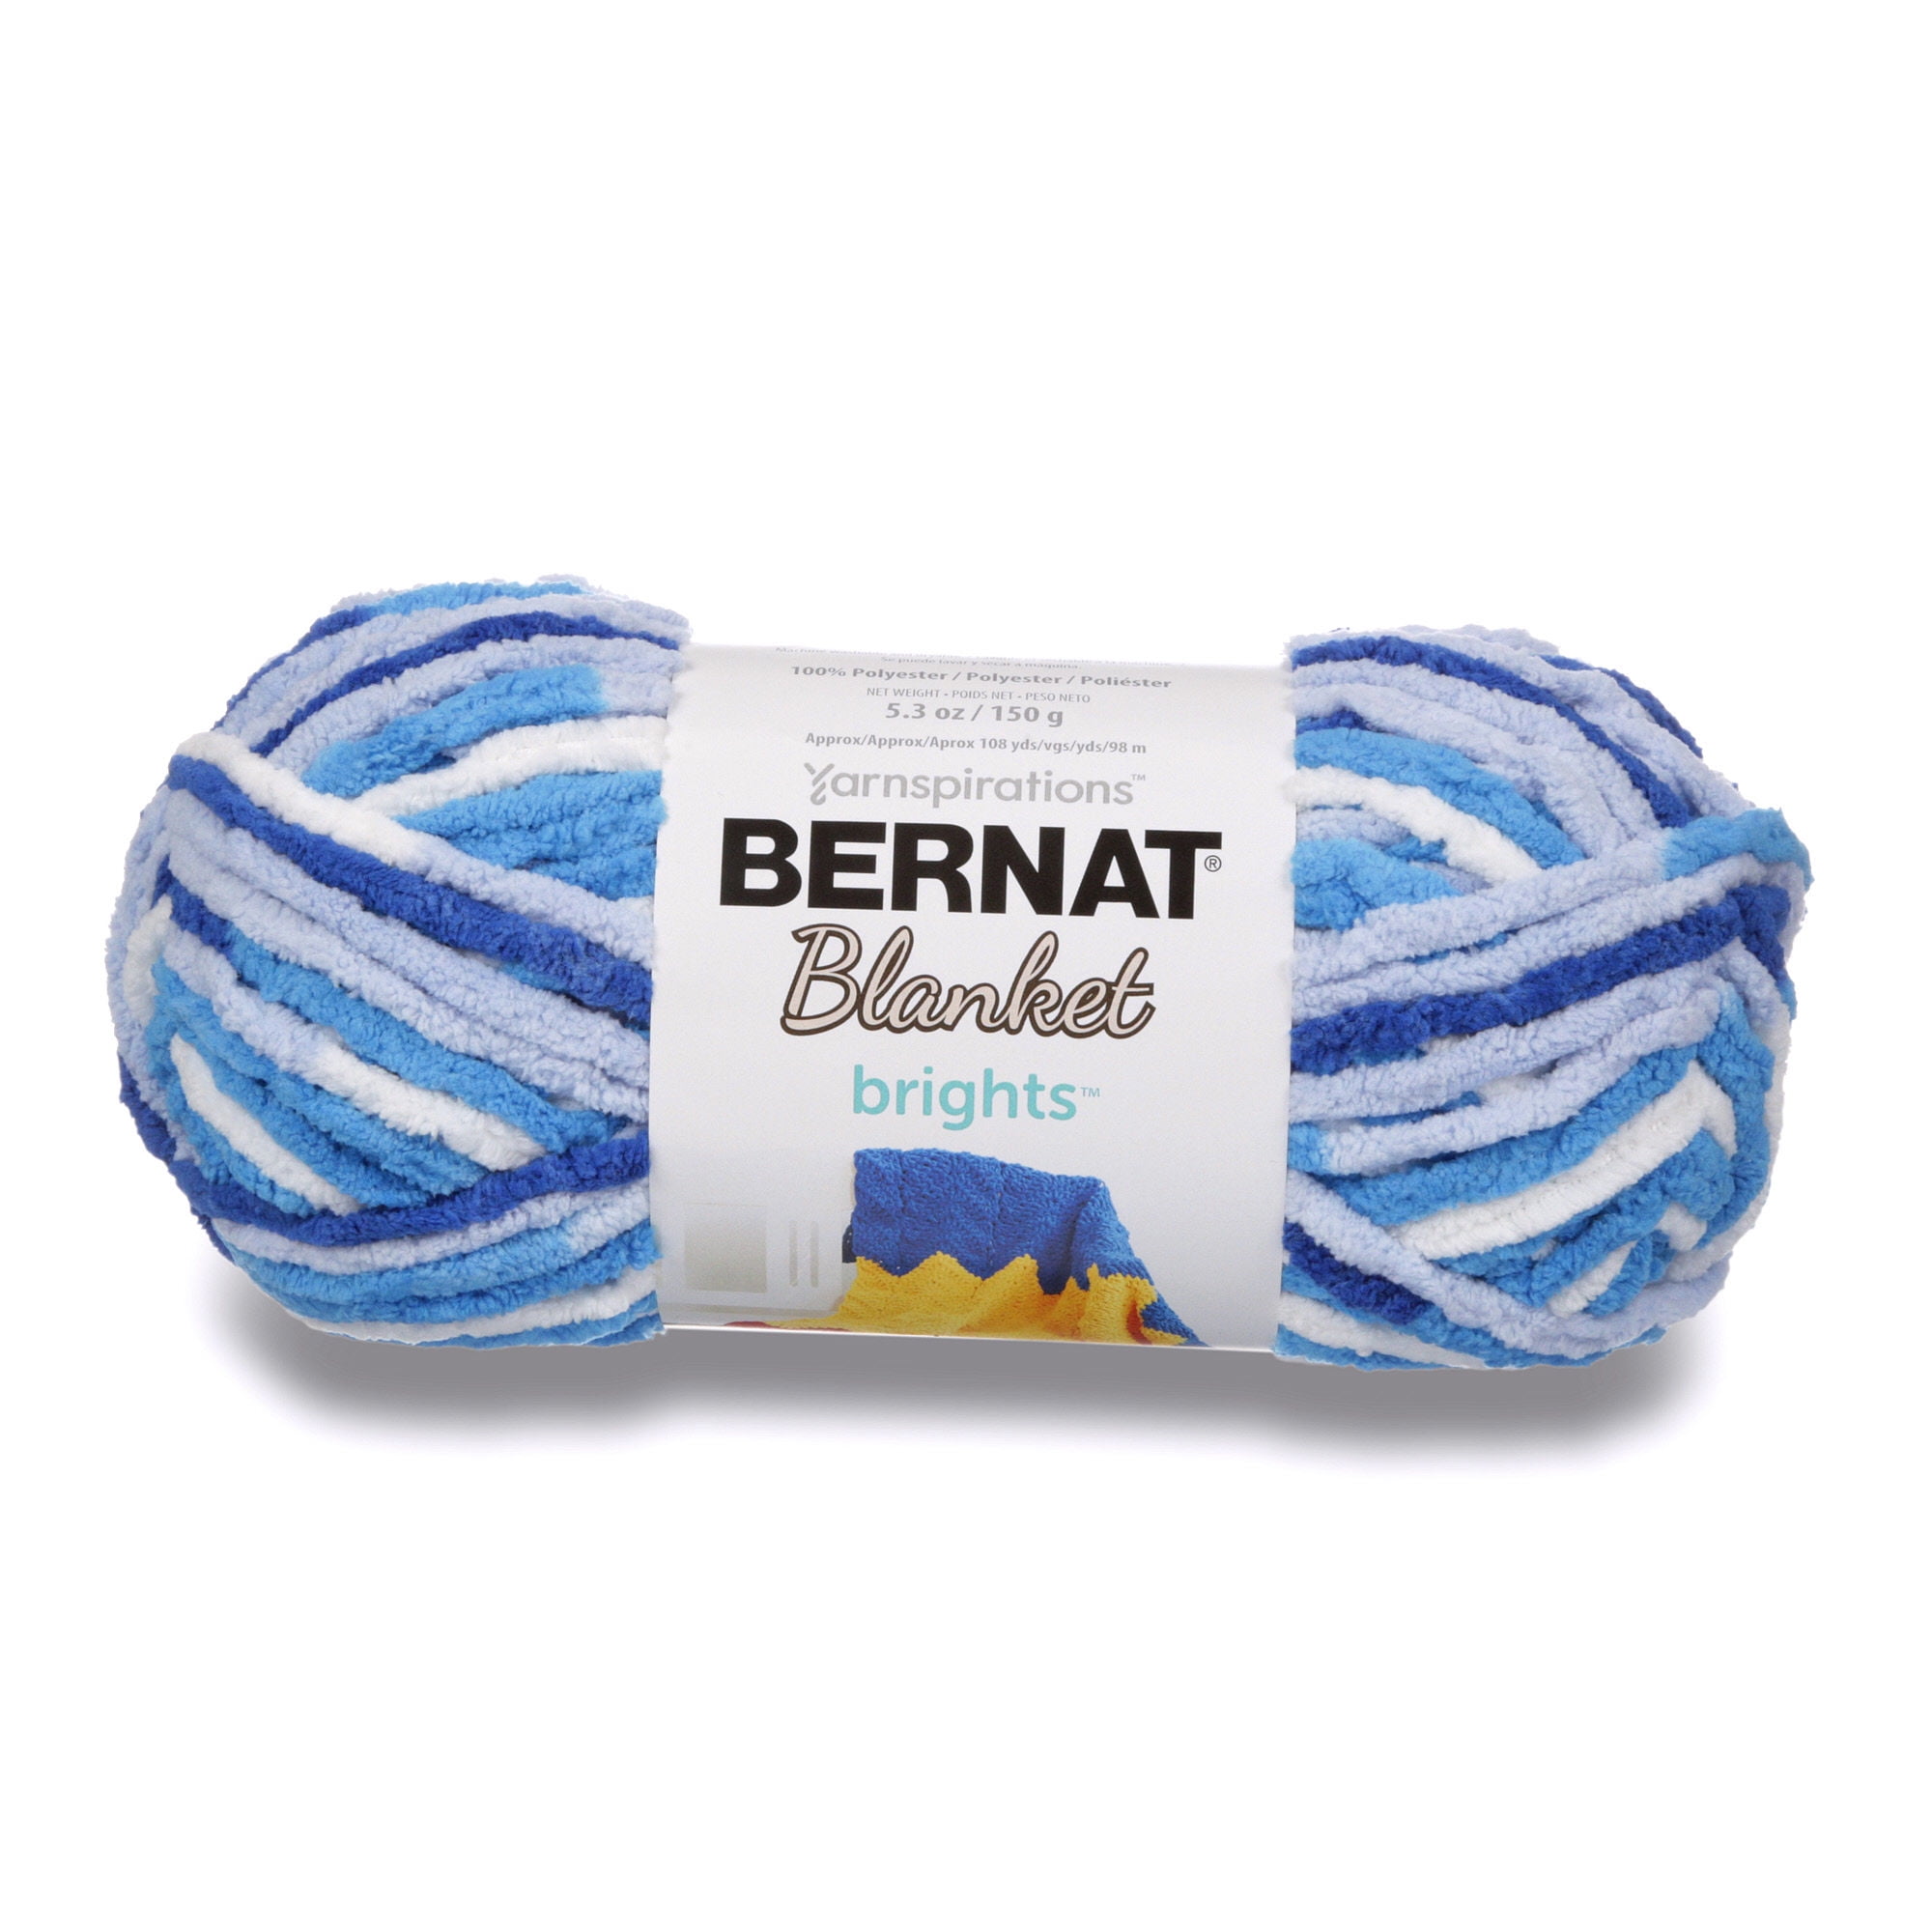 Bernat Blanket Brights SCHOOL BUS YELLOW 12003 Yarn Big 10.5 Oz